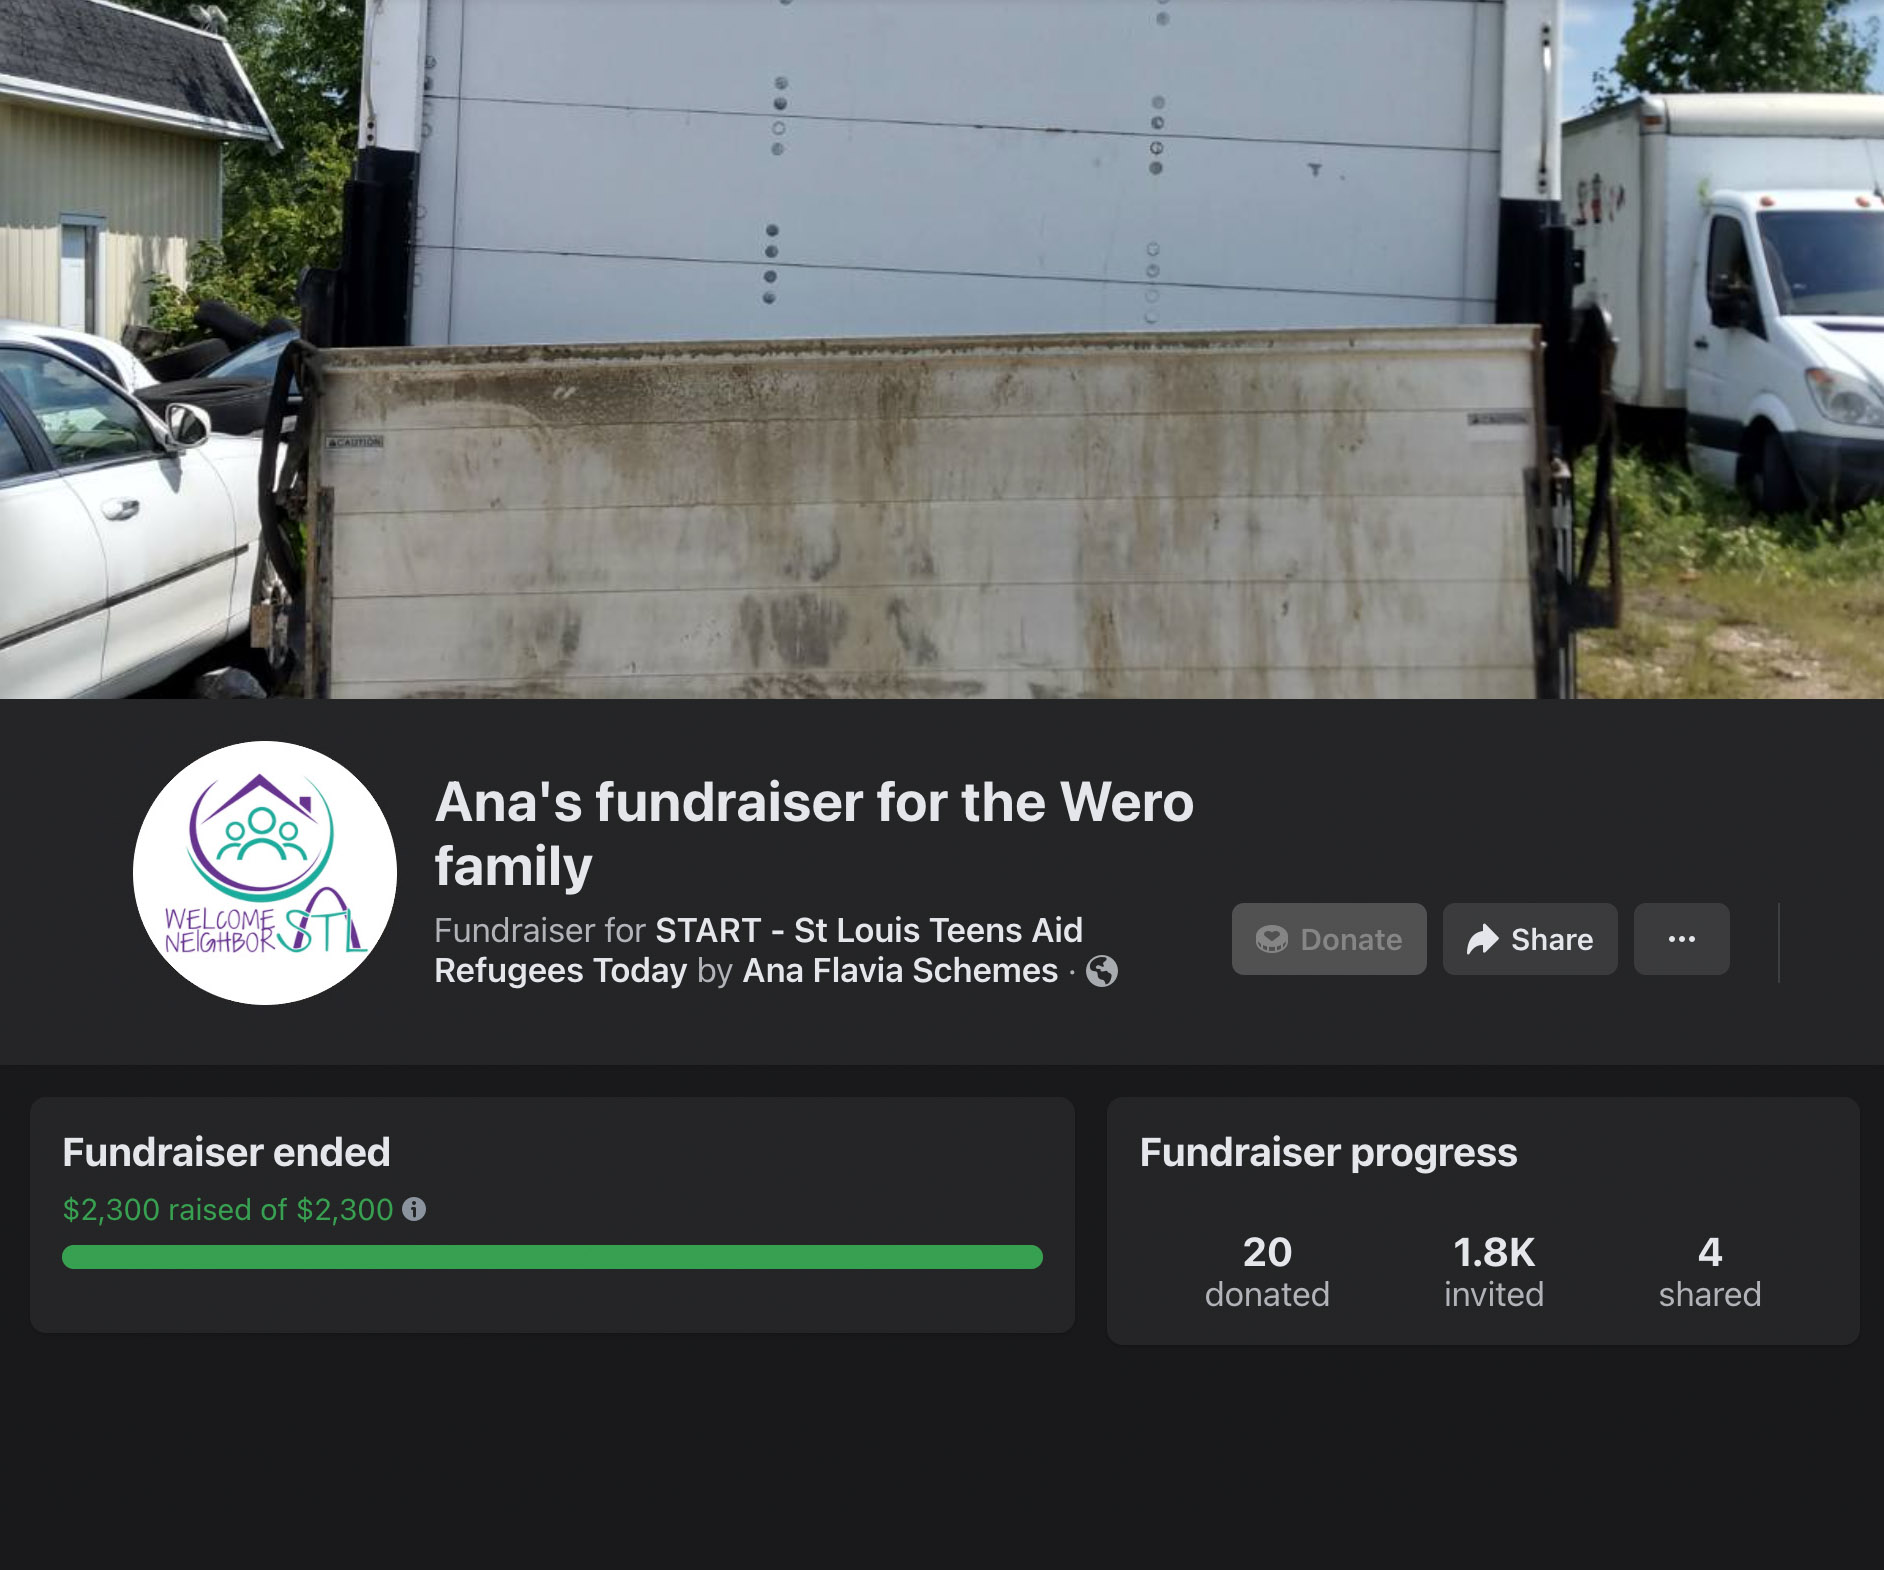 Ana's fundraiser for the Wero family